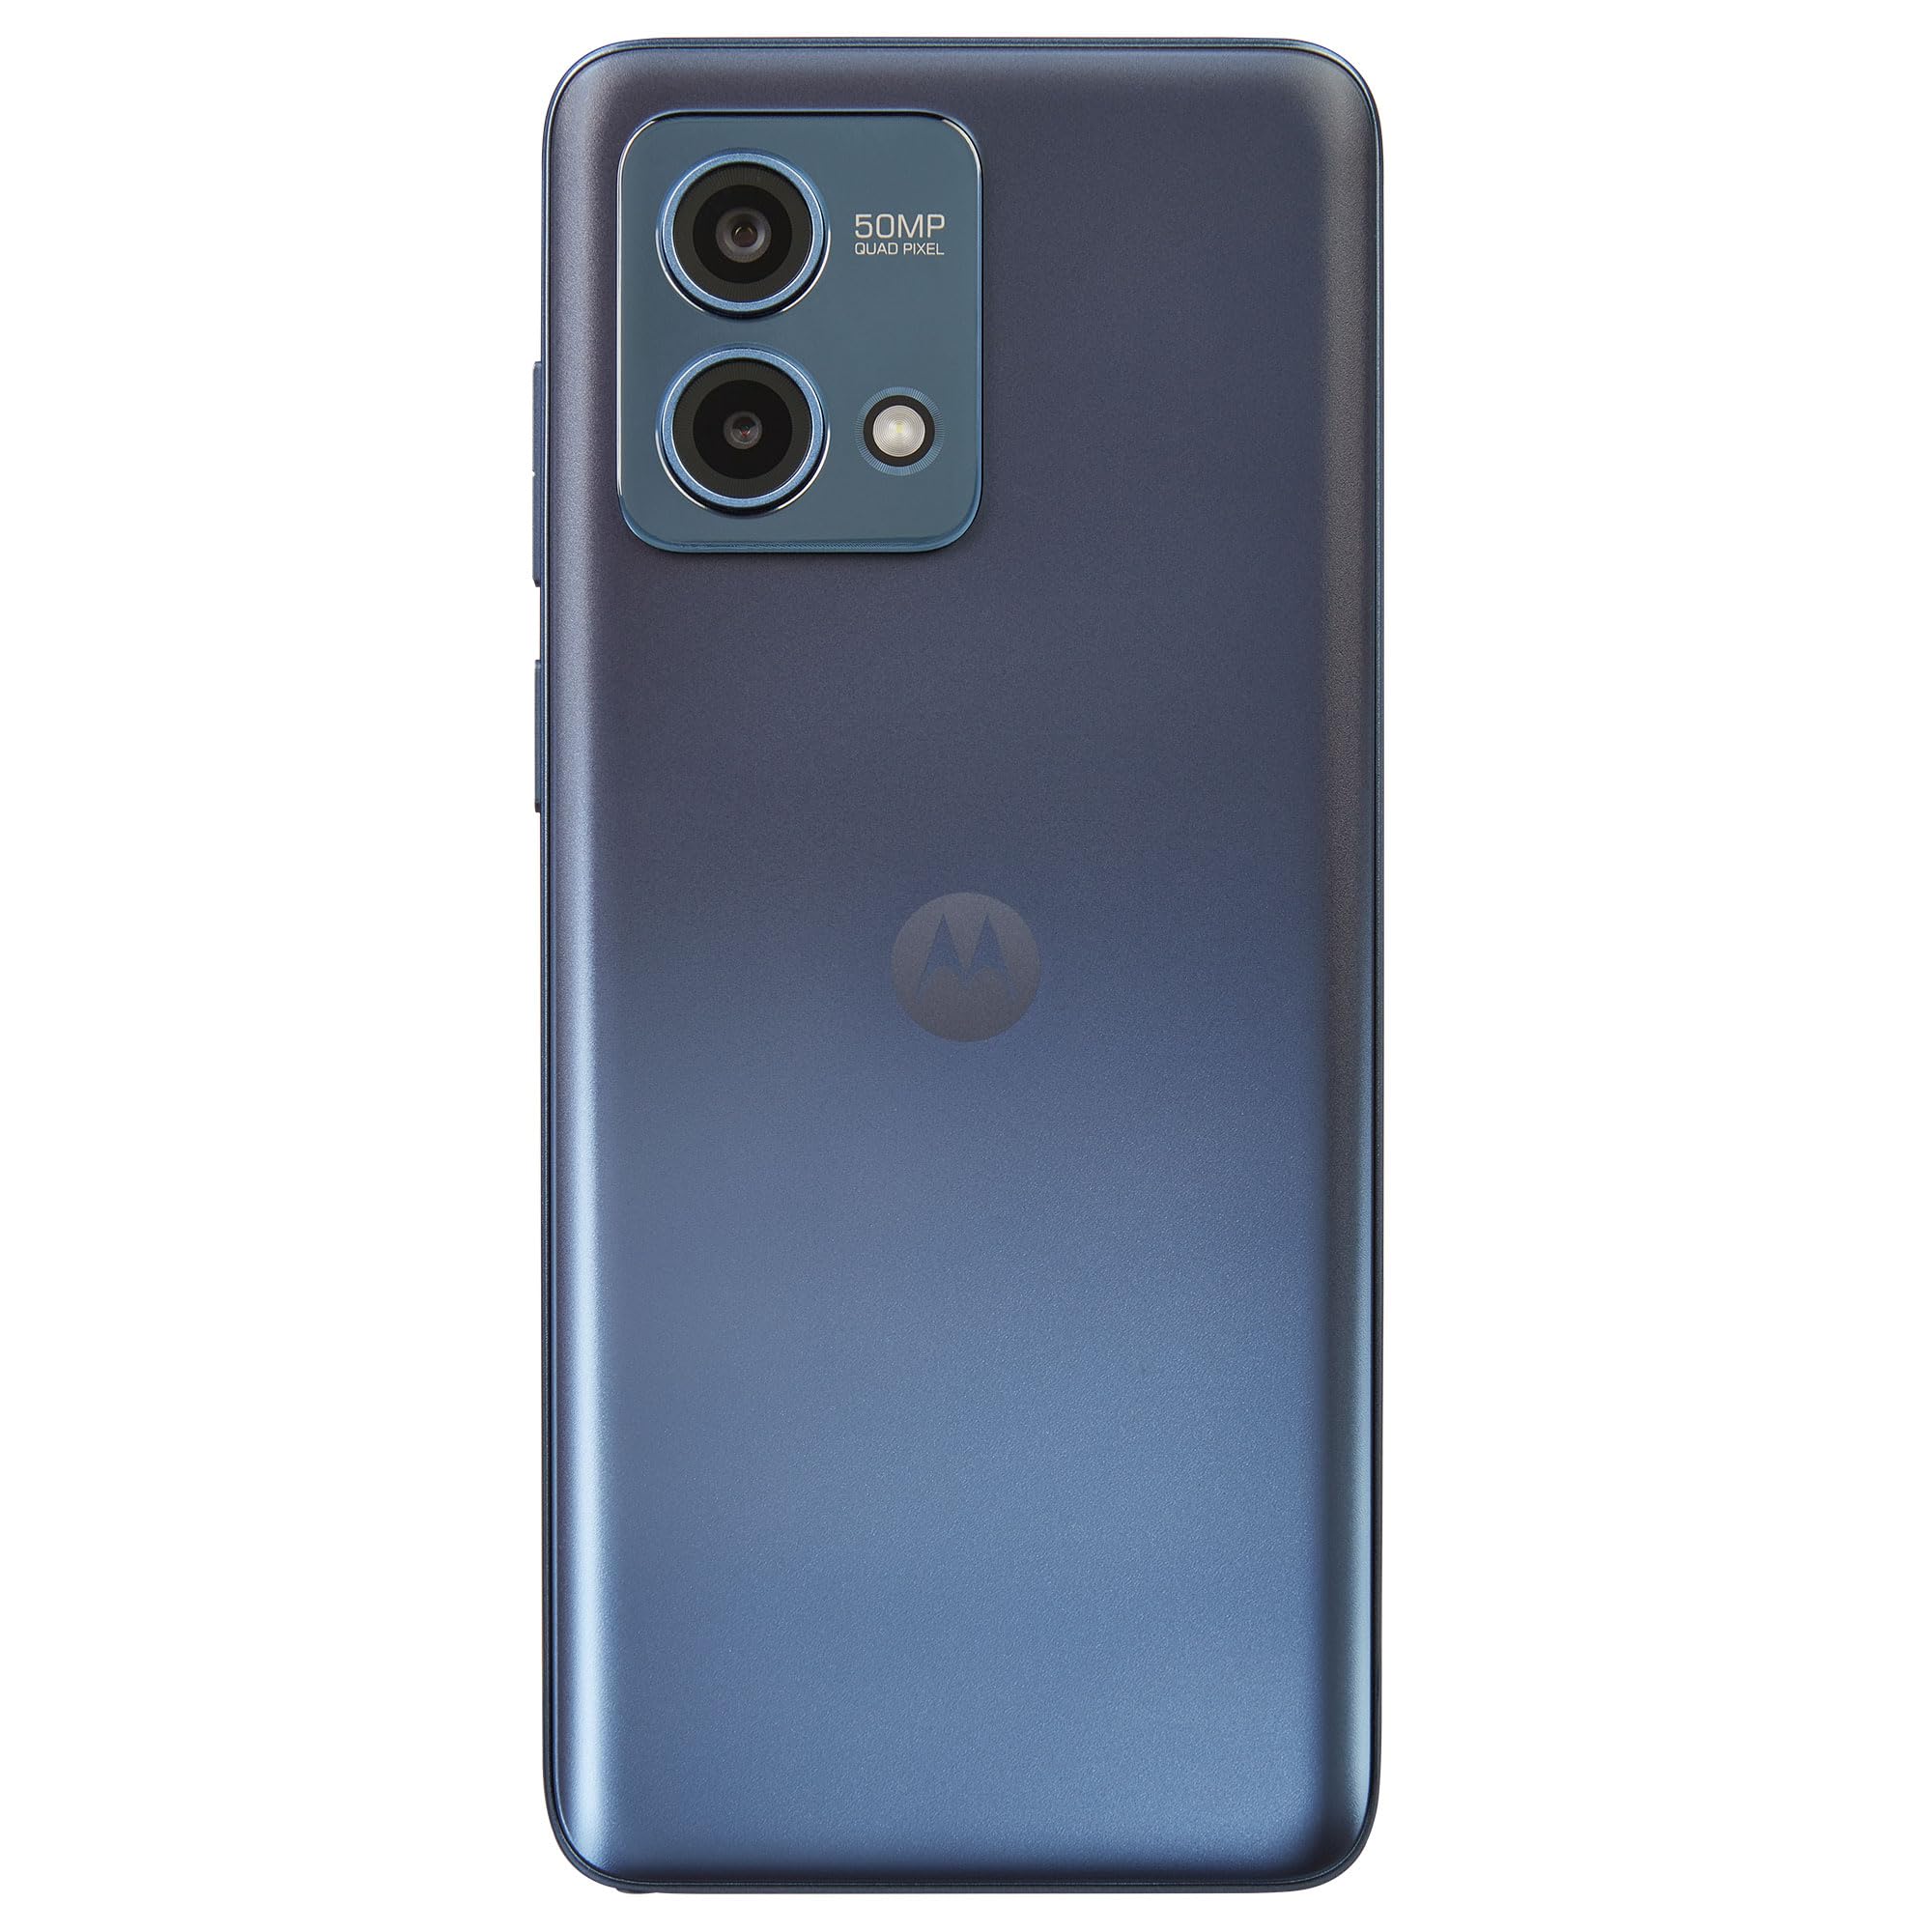 Total by Verizon Motorola Moto g Stylus (2023), 64GB, Blue - Prepaid Smartphone (Locked)